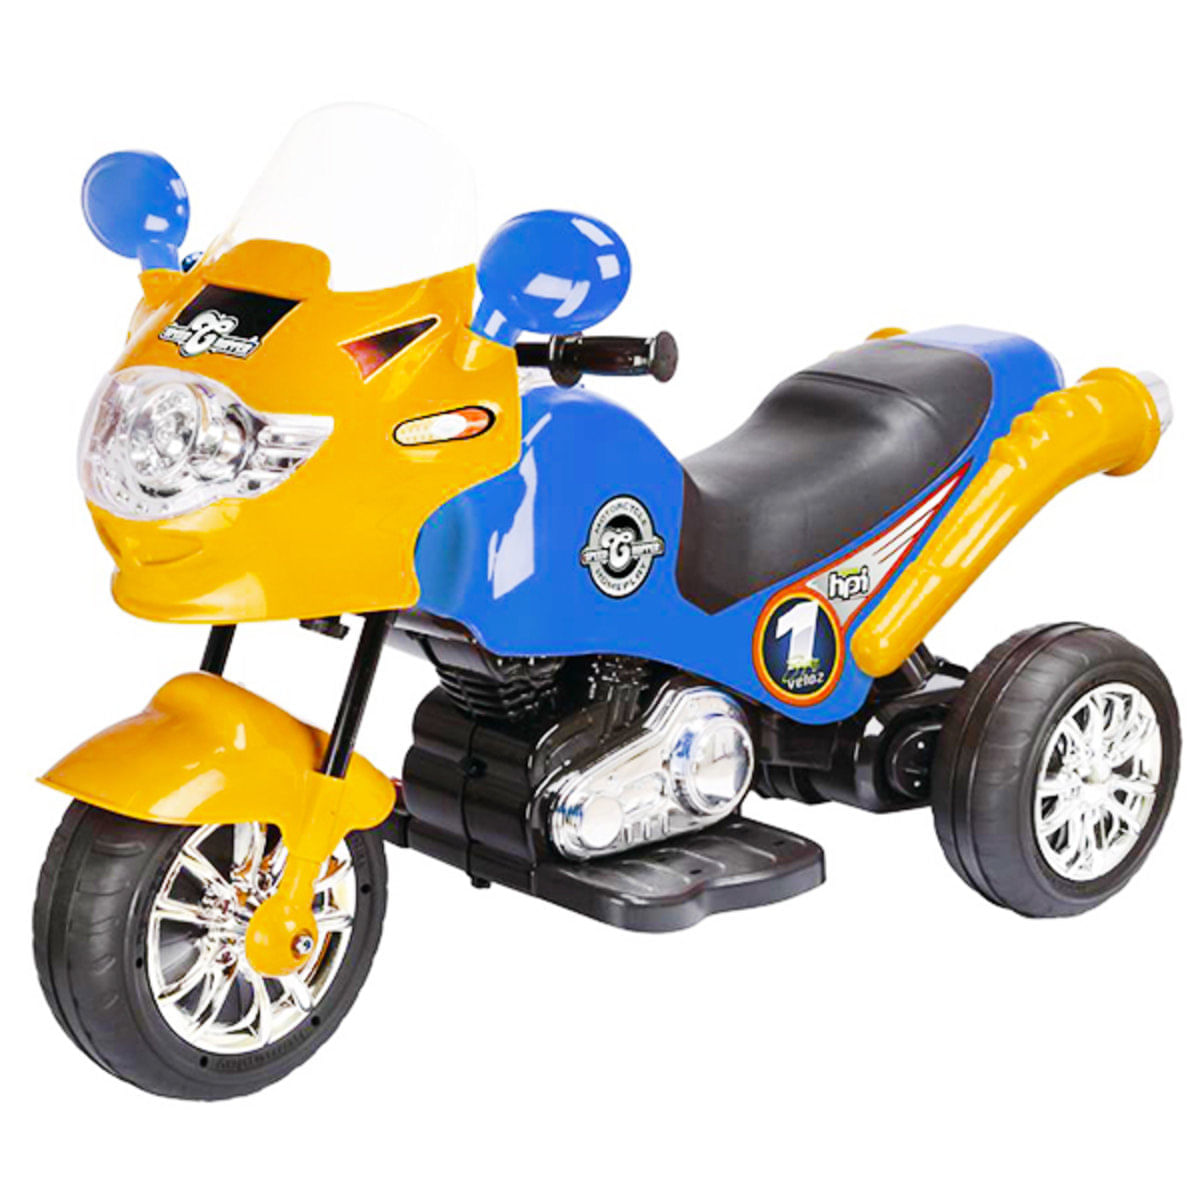 Moto Elétrica Infantil Bandeirante XT3 Grafite 6V - Carrefour - Carrefour